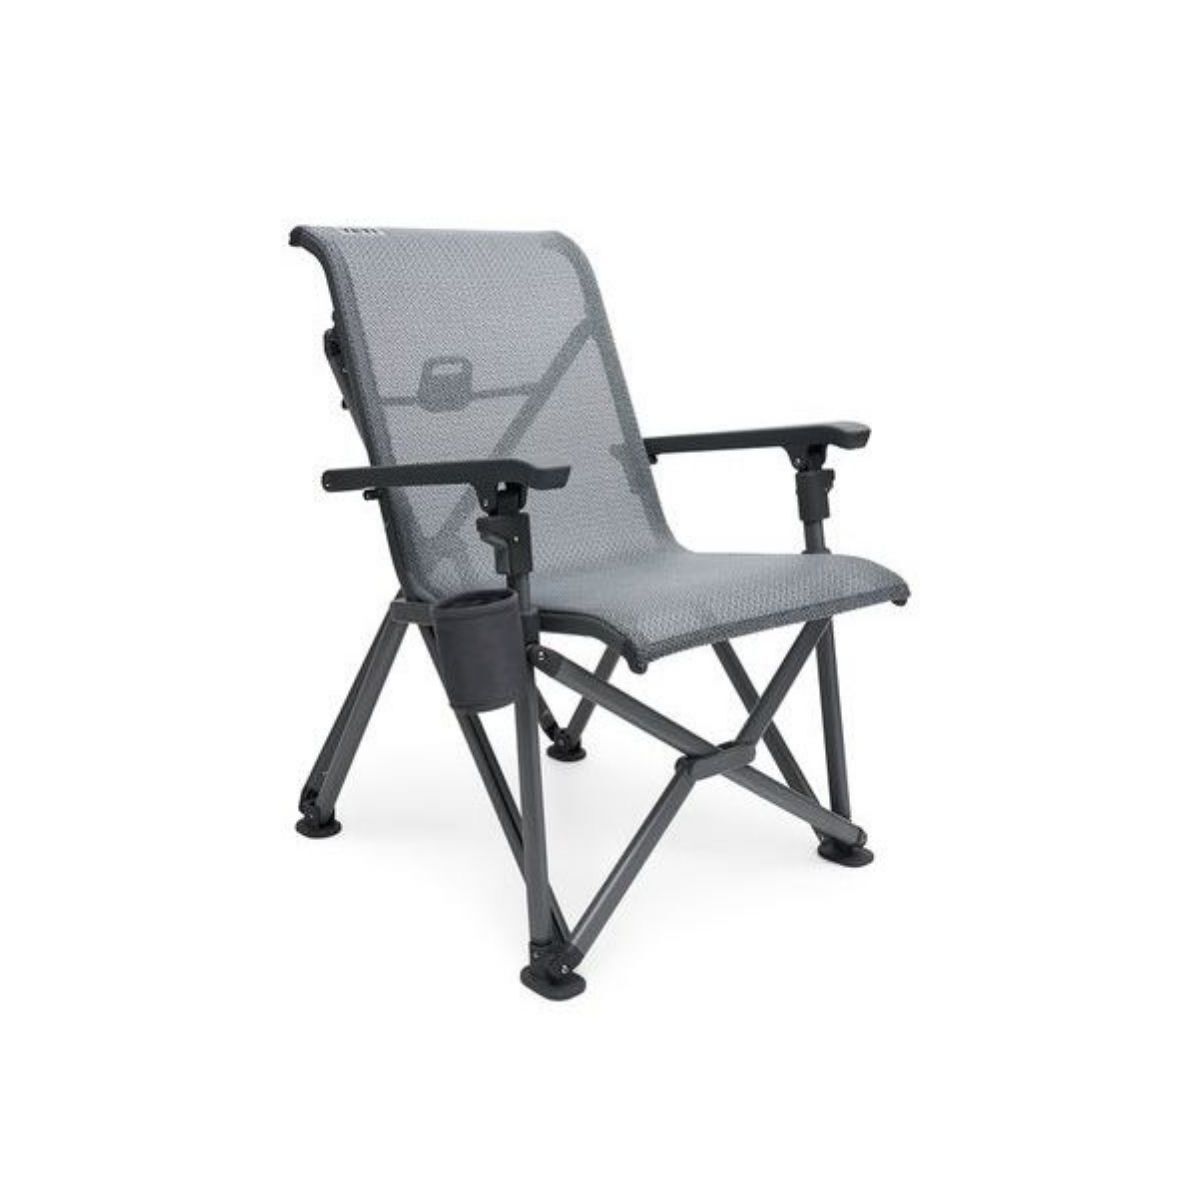 Yeti Trailhead Camp Chair - Campingstål